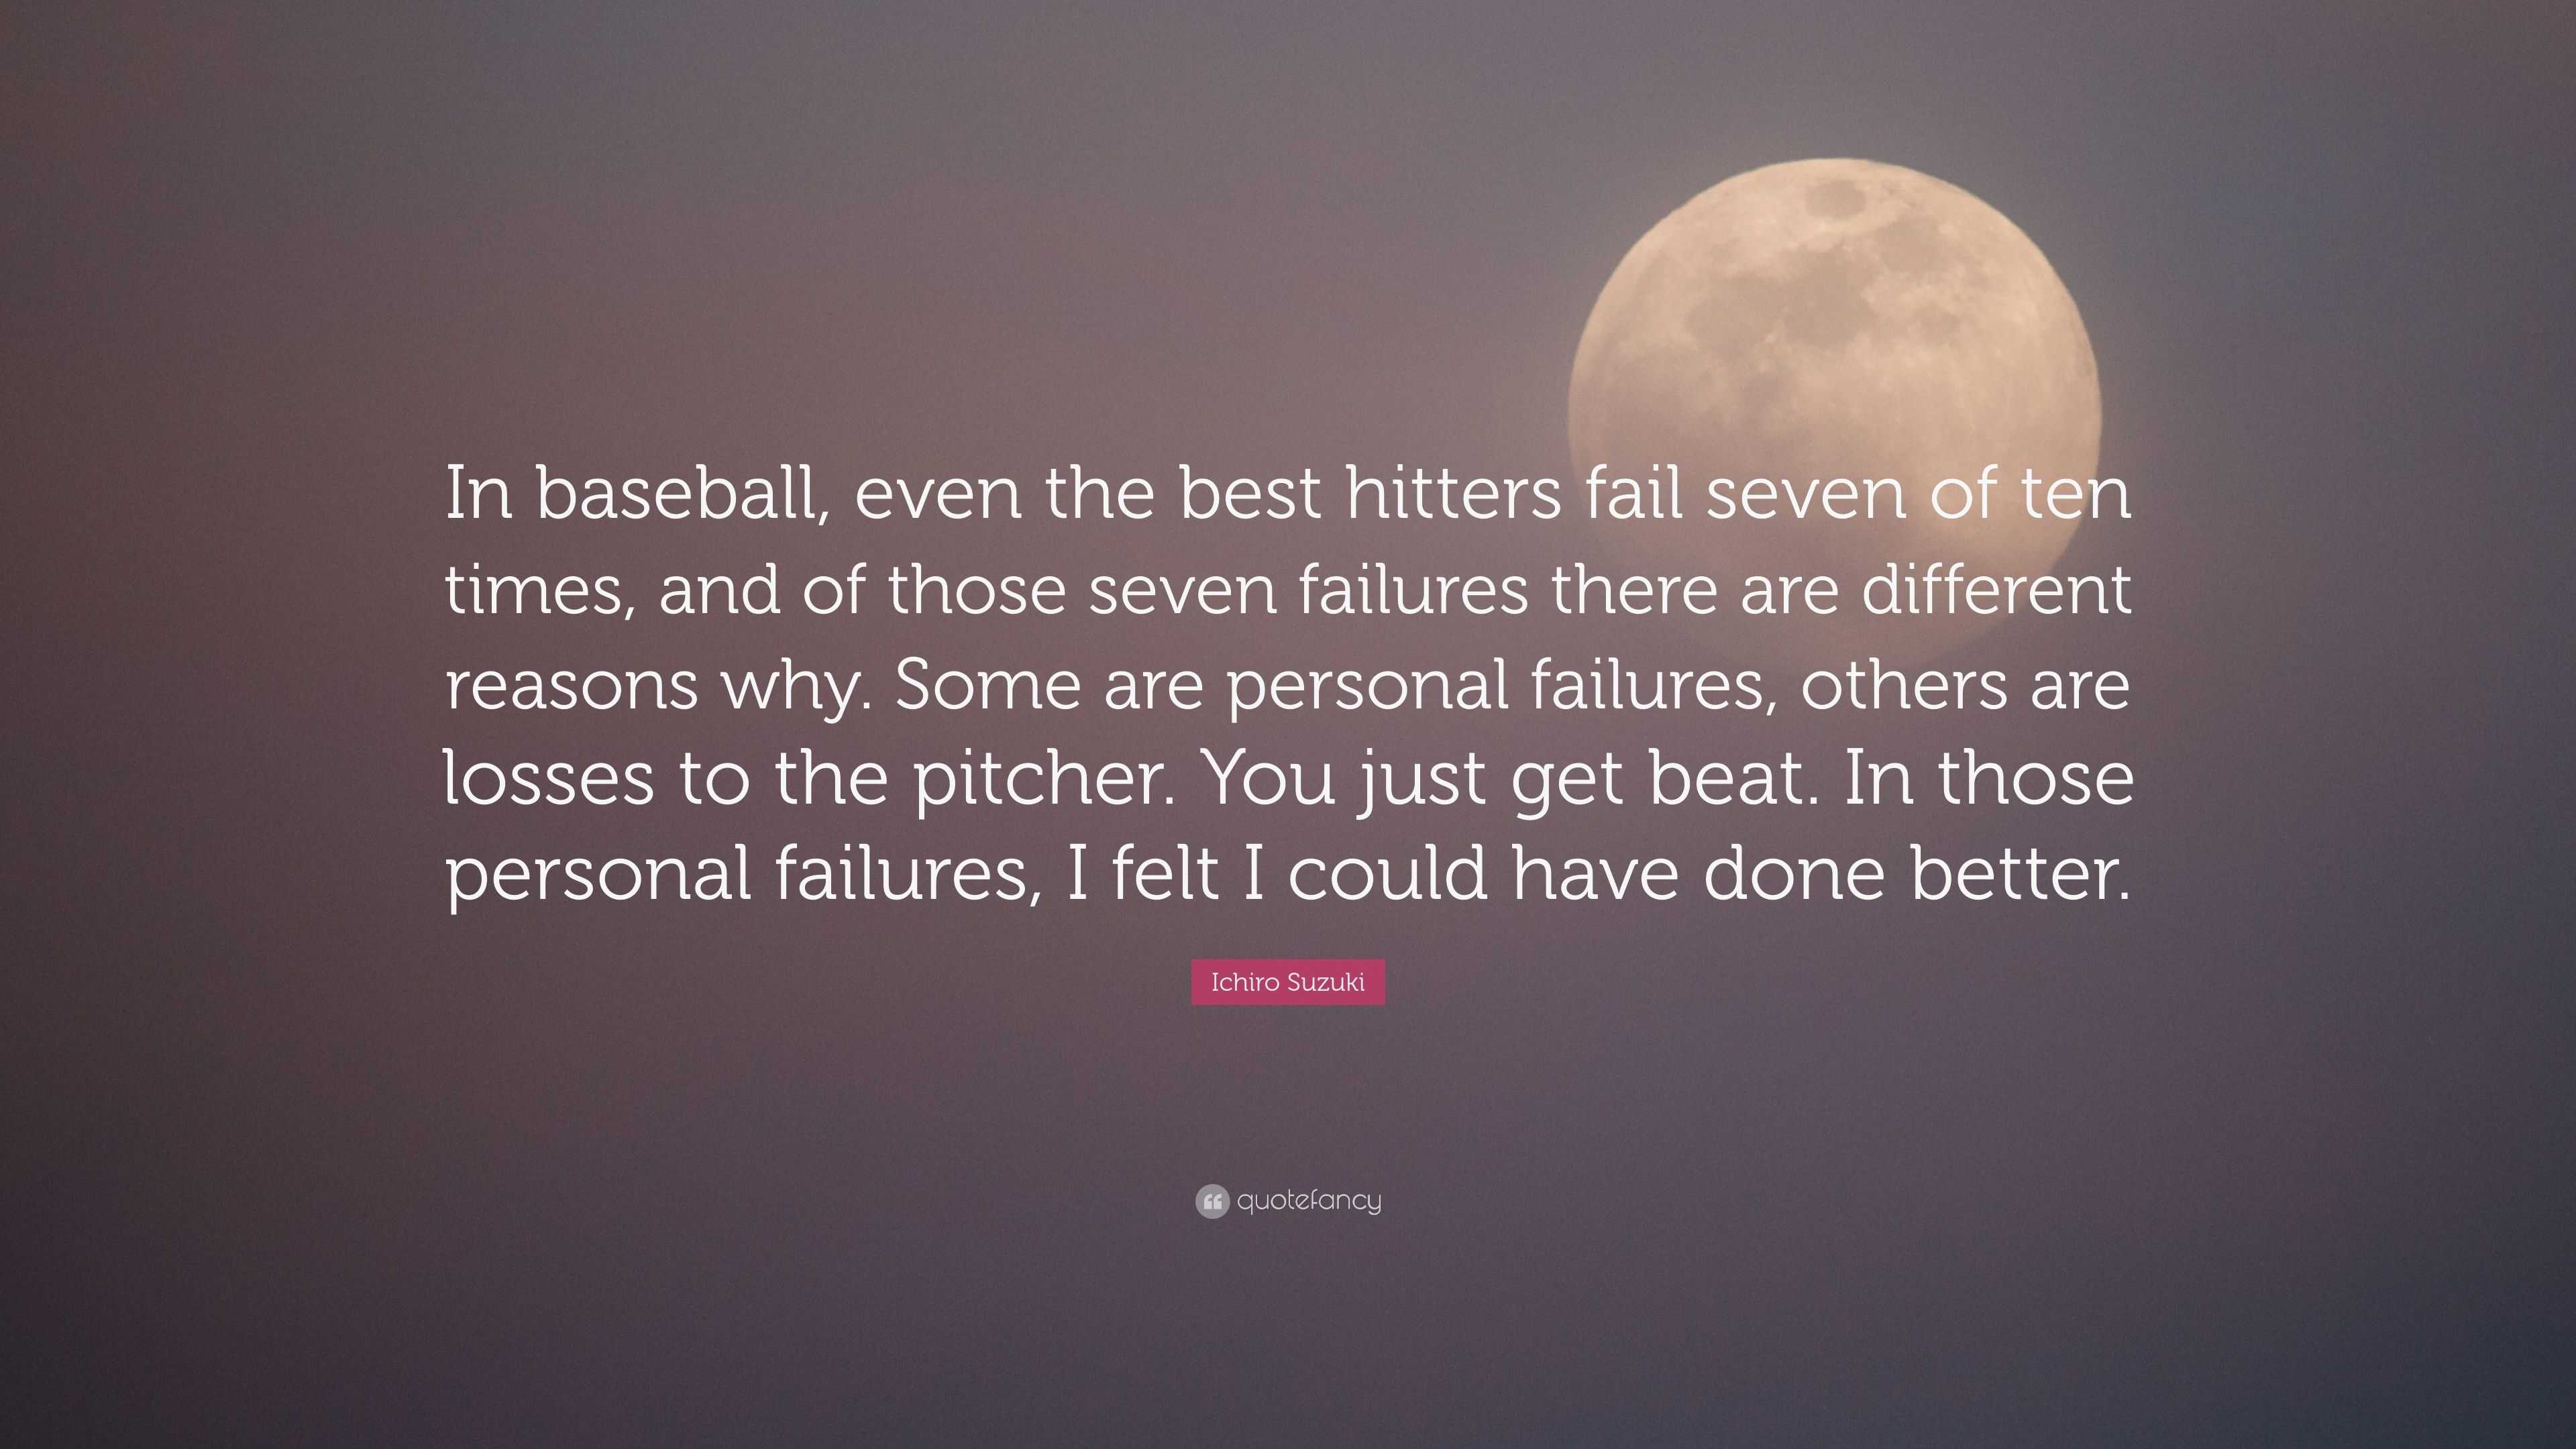 Ichiro Suzuki Quote “in Baseball Even The Best Hitters Fail Seven Of